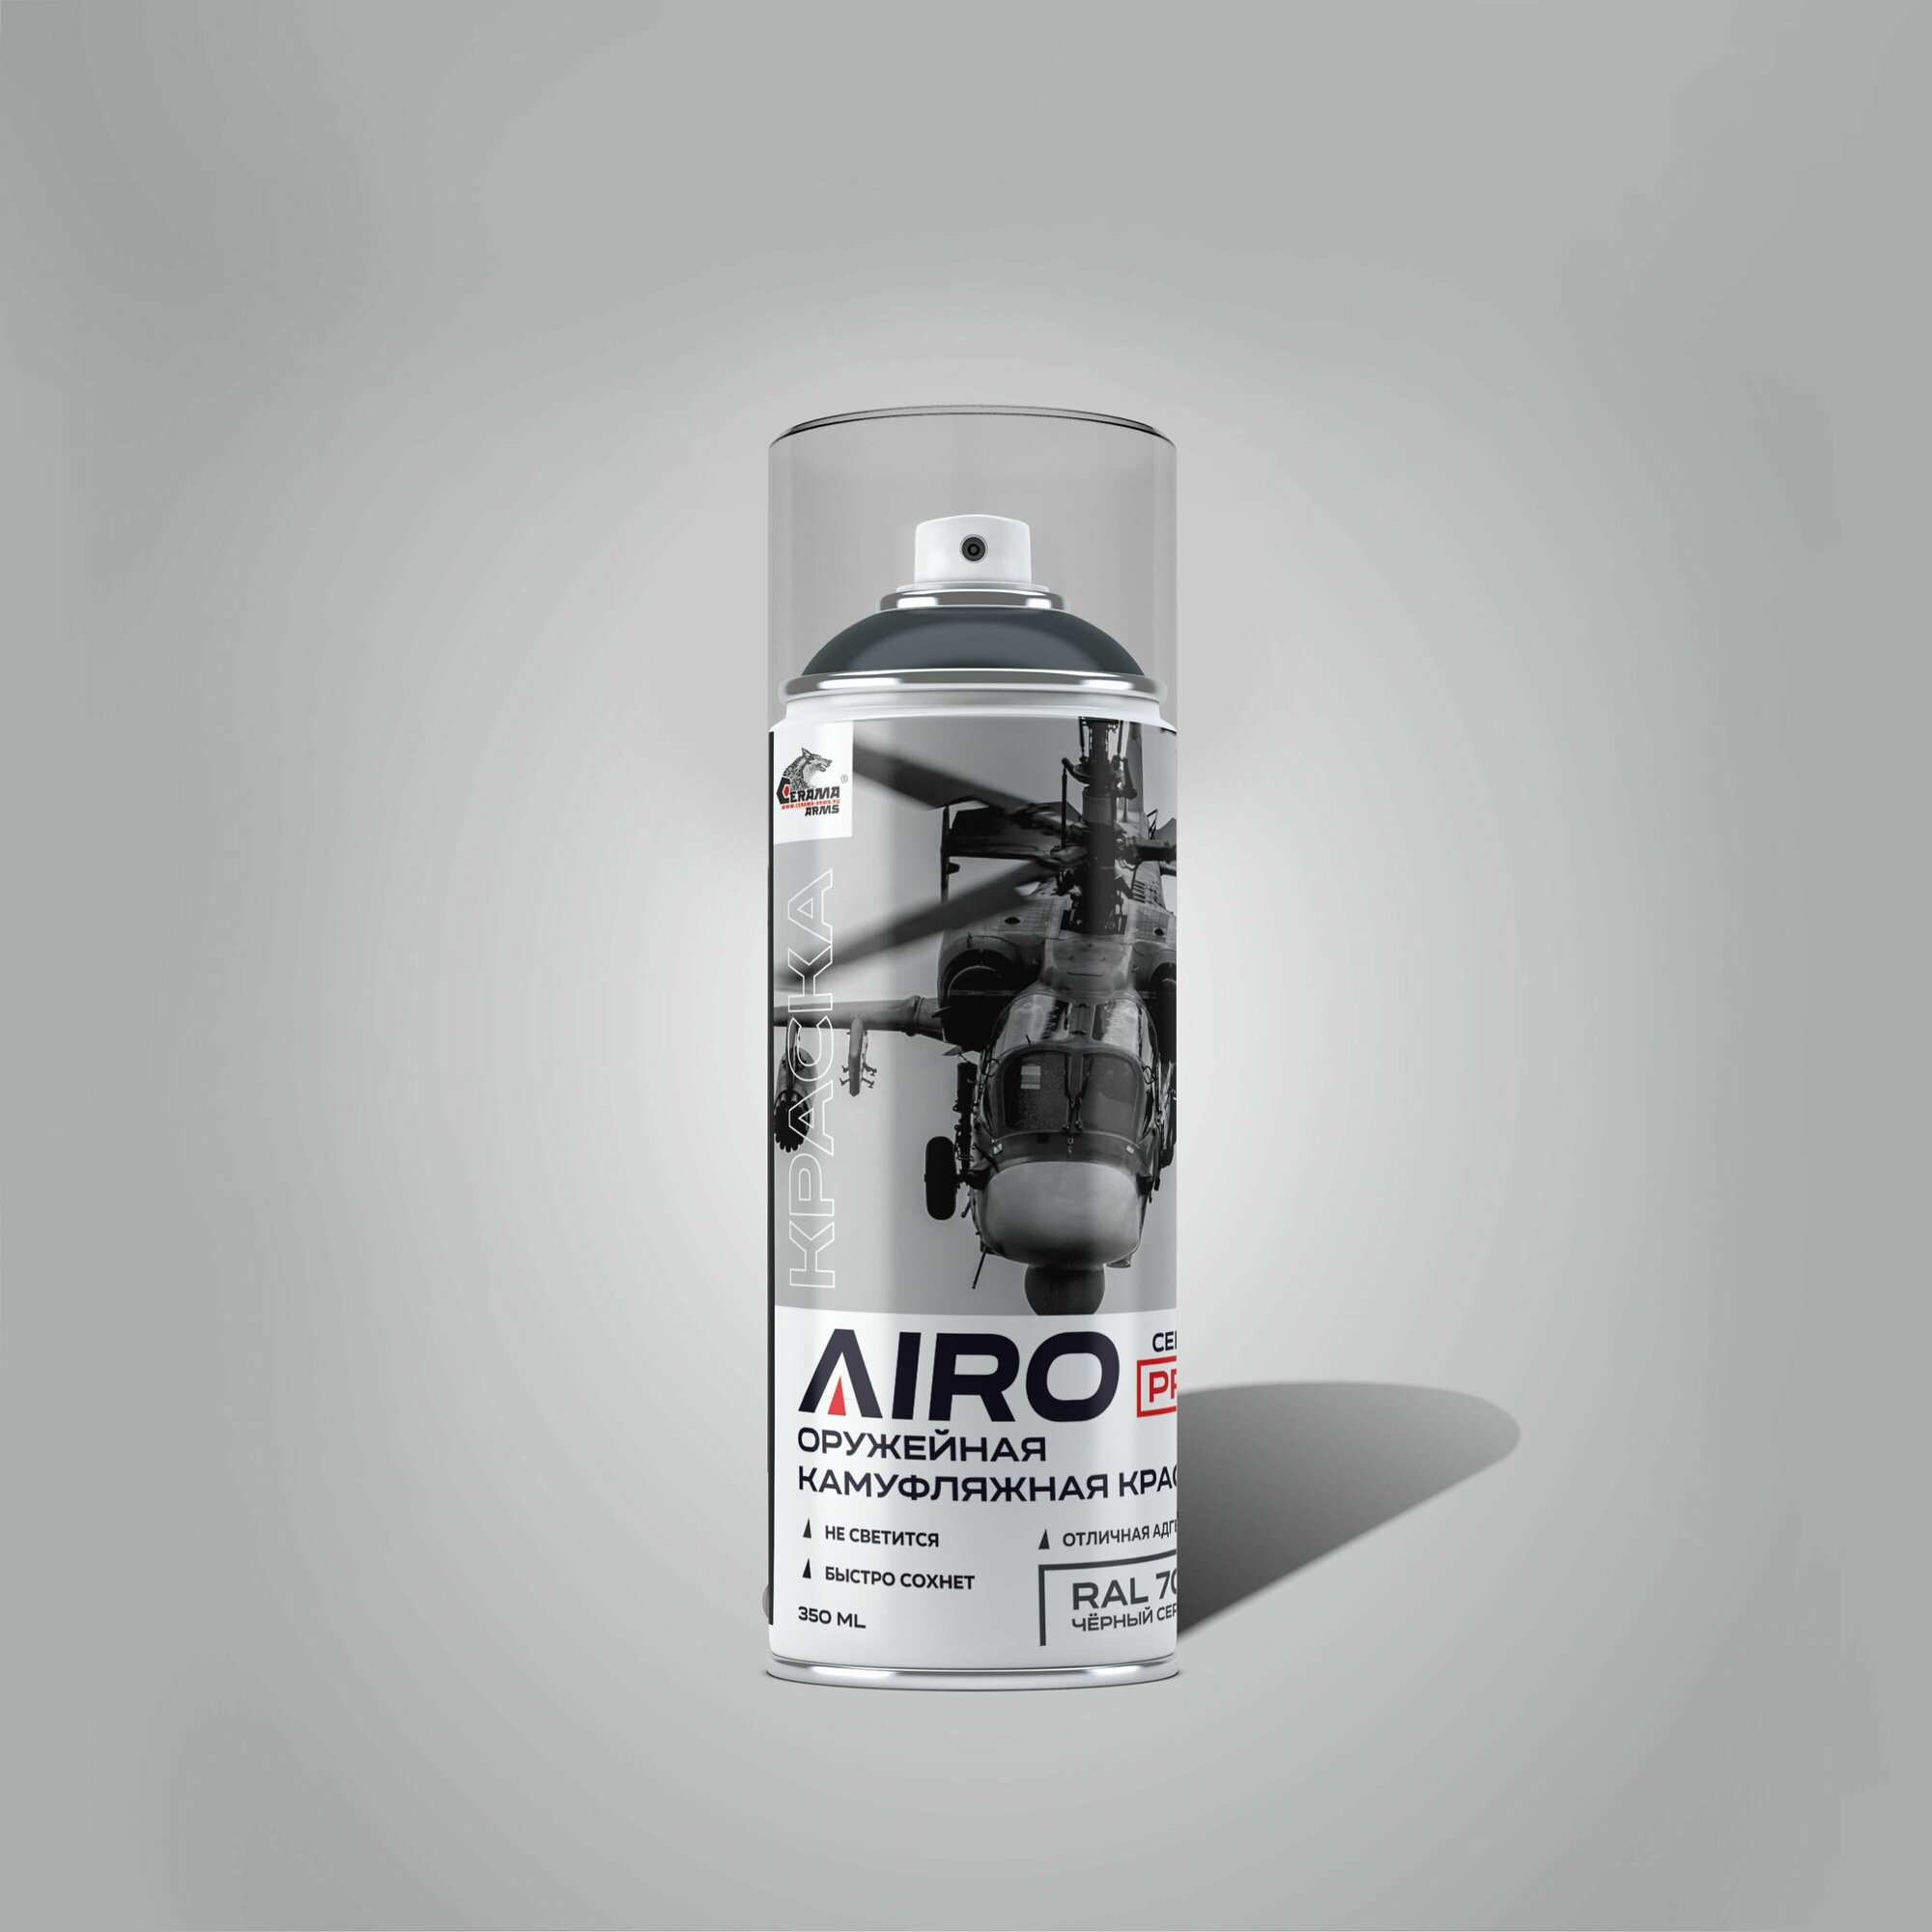 AIRO - PRO 7021 черный серый CERAMA-ARMS Оружейная аэрозольная камуфляжная краска обьем 350/250 Ral 7021 цвет: BLACK GREY